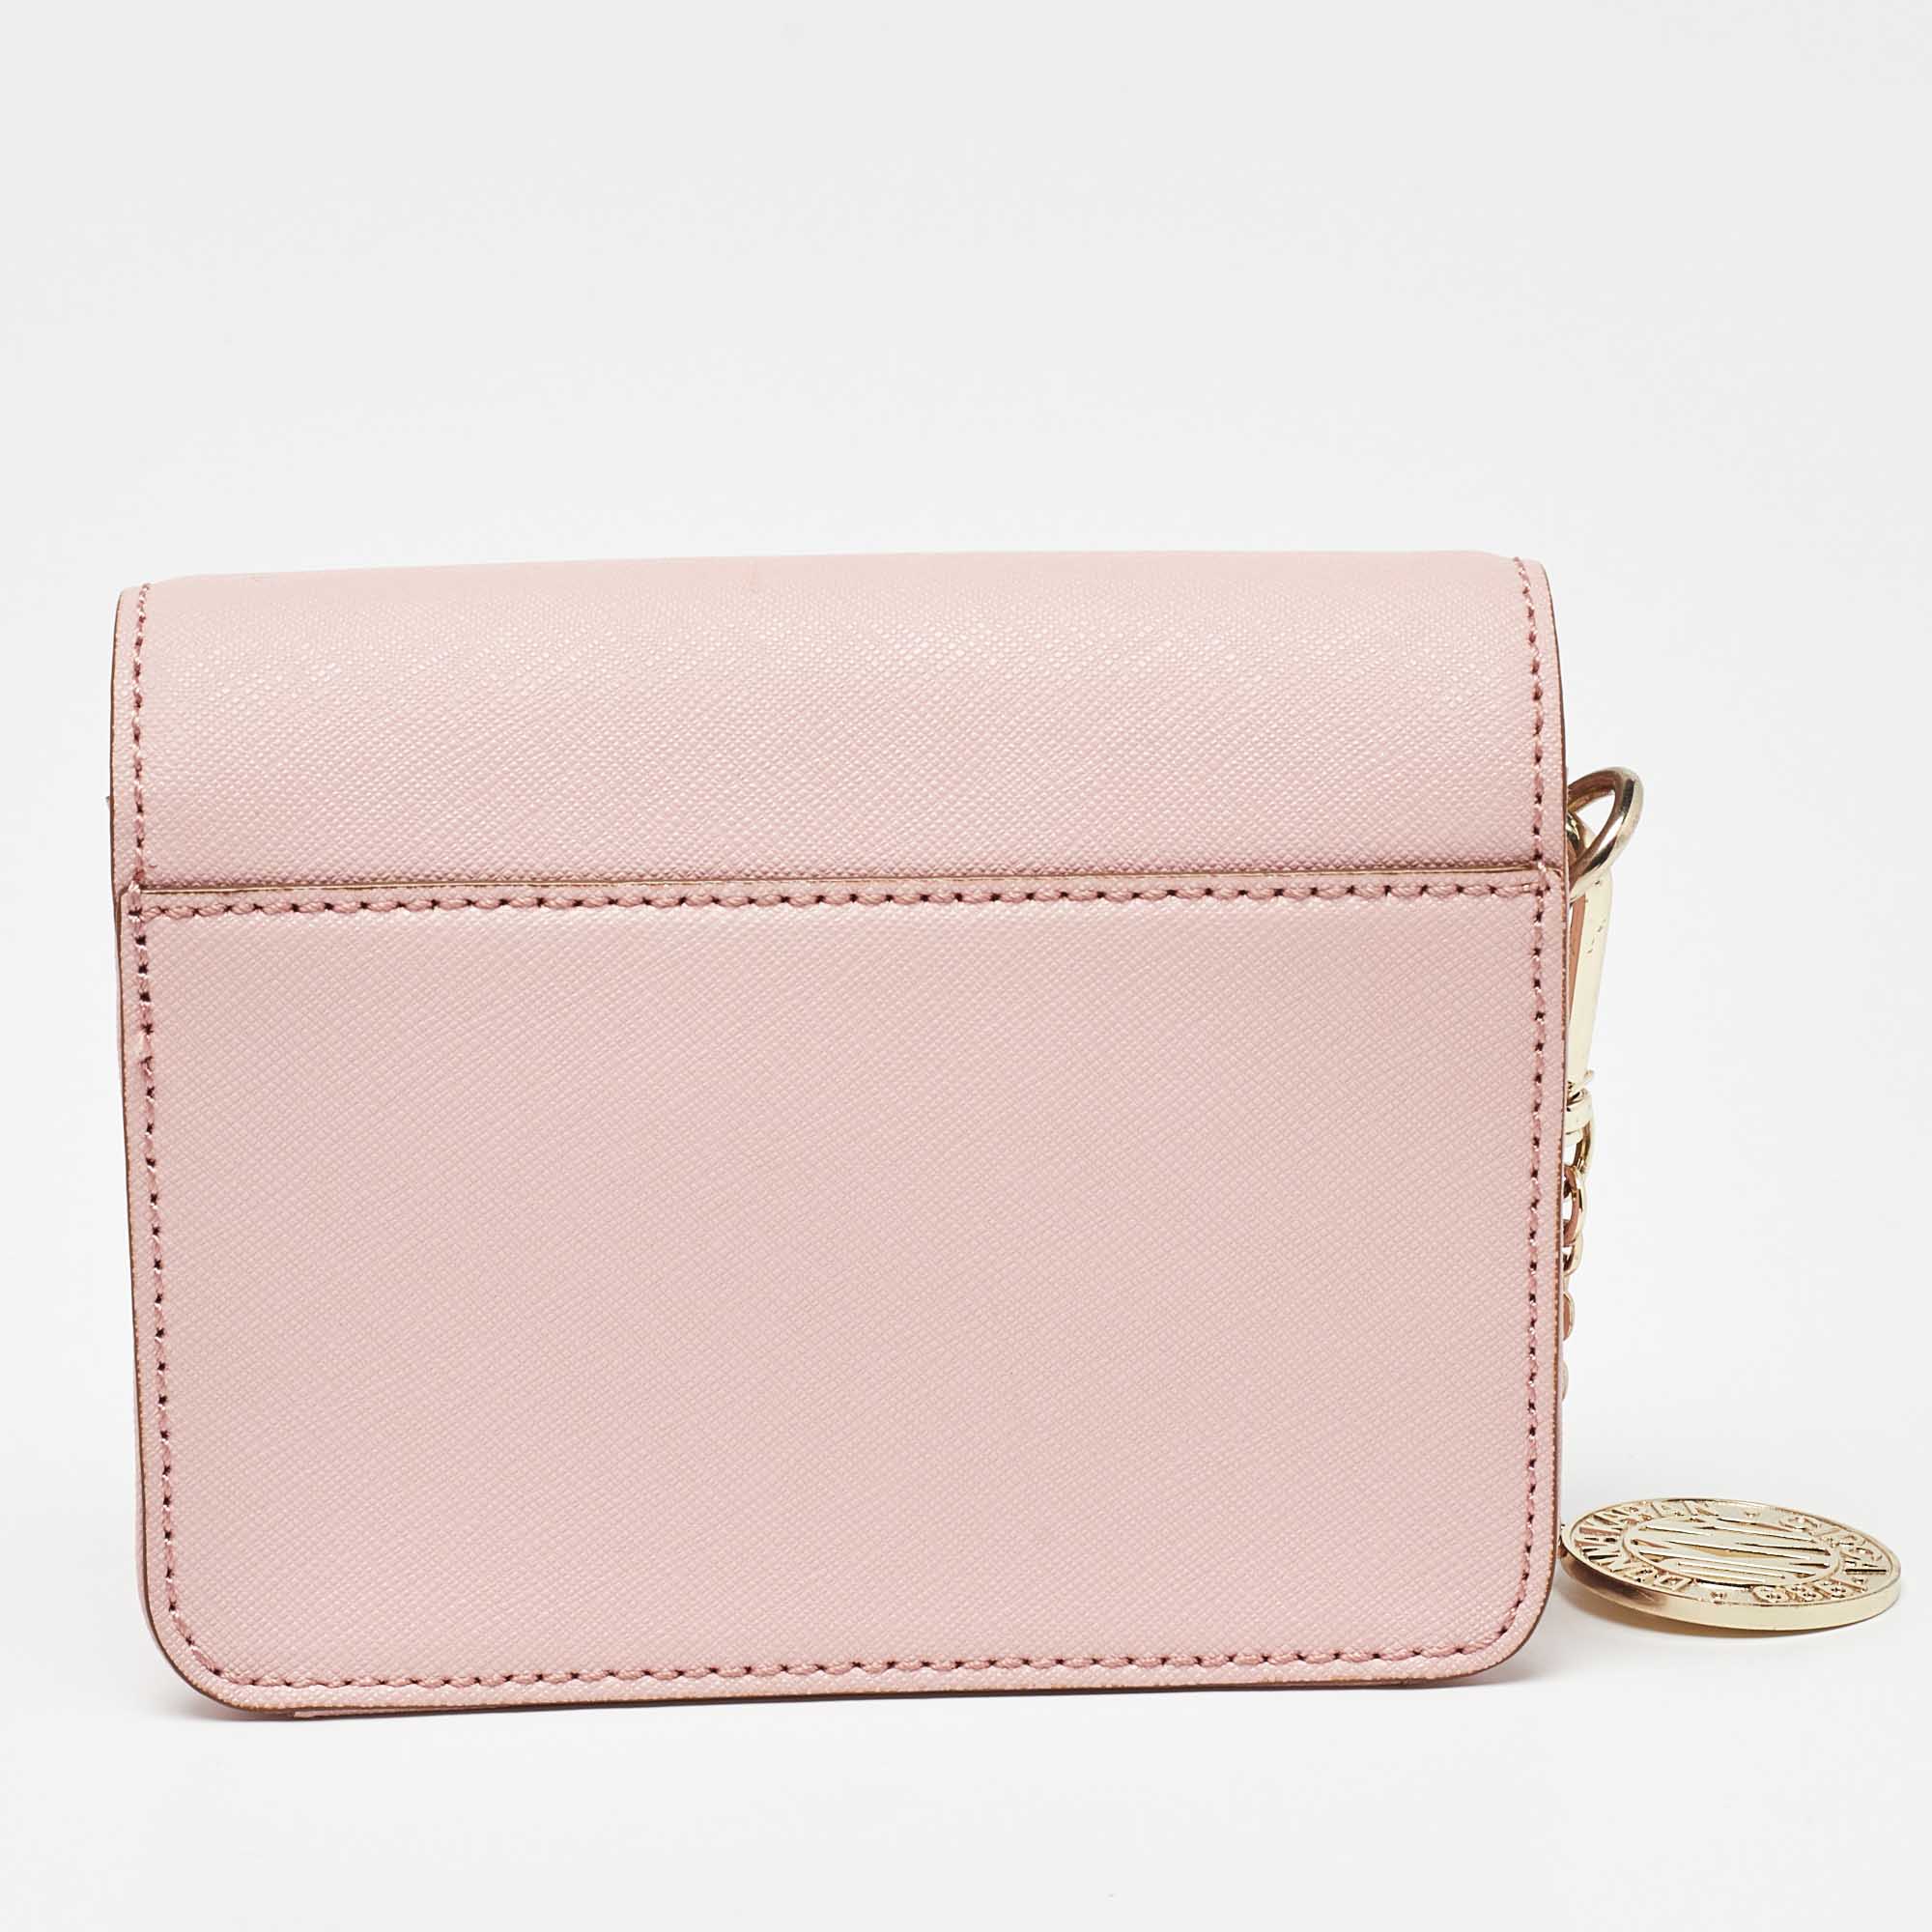 DKNY Pink Leather Bryant Park Flap Crossbody Bag